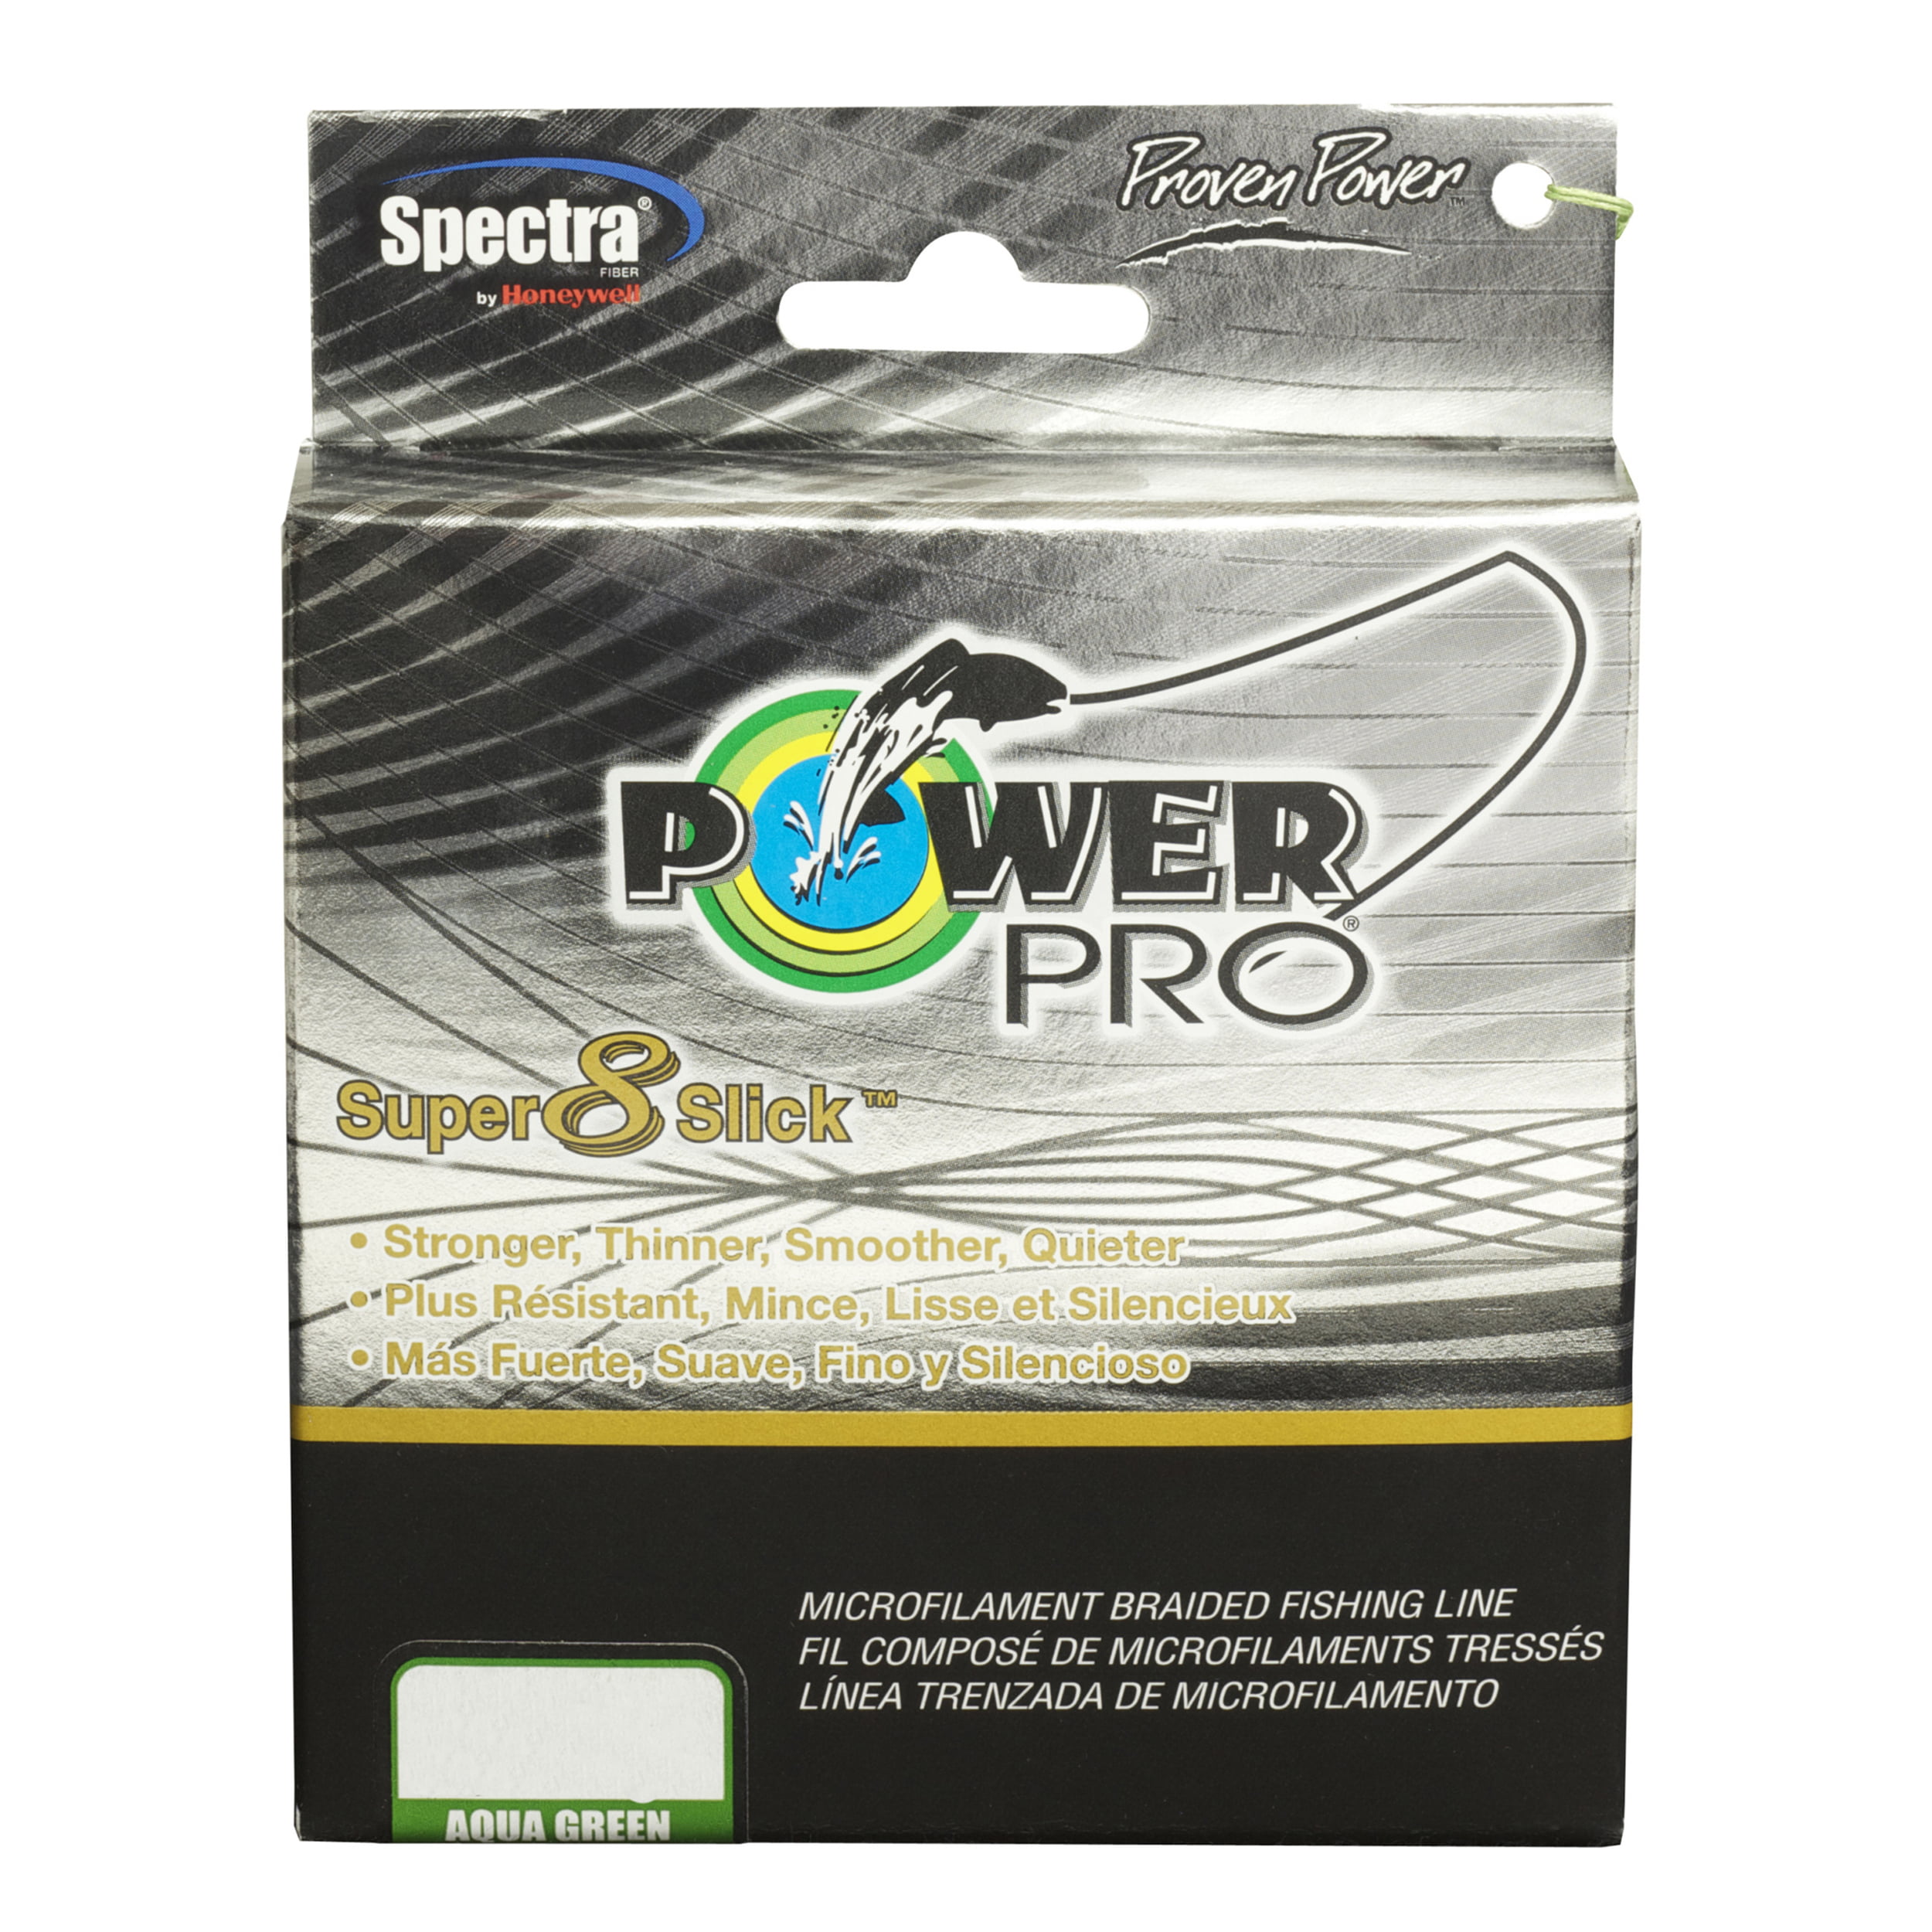 Power Pro PowerPro Super 8 Slick Braided Line 300 Yards, 80 lbs Tested,  0.017 Diameter, Aqua Green